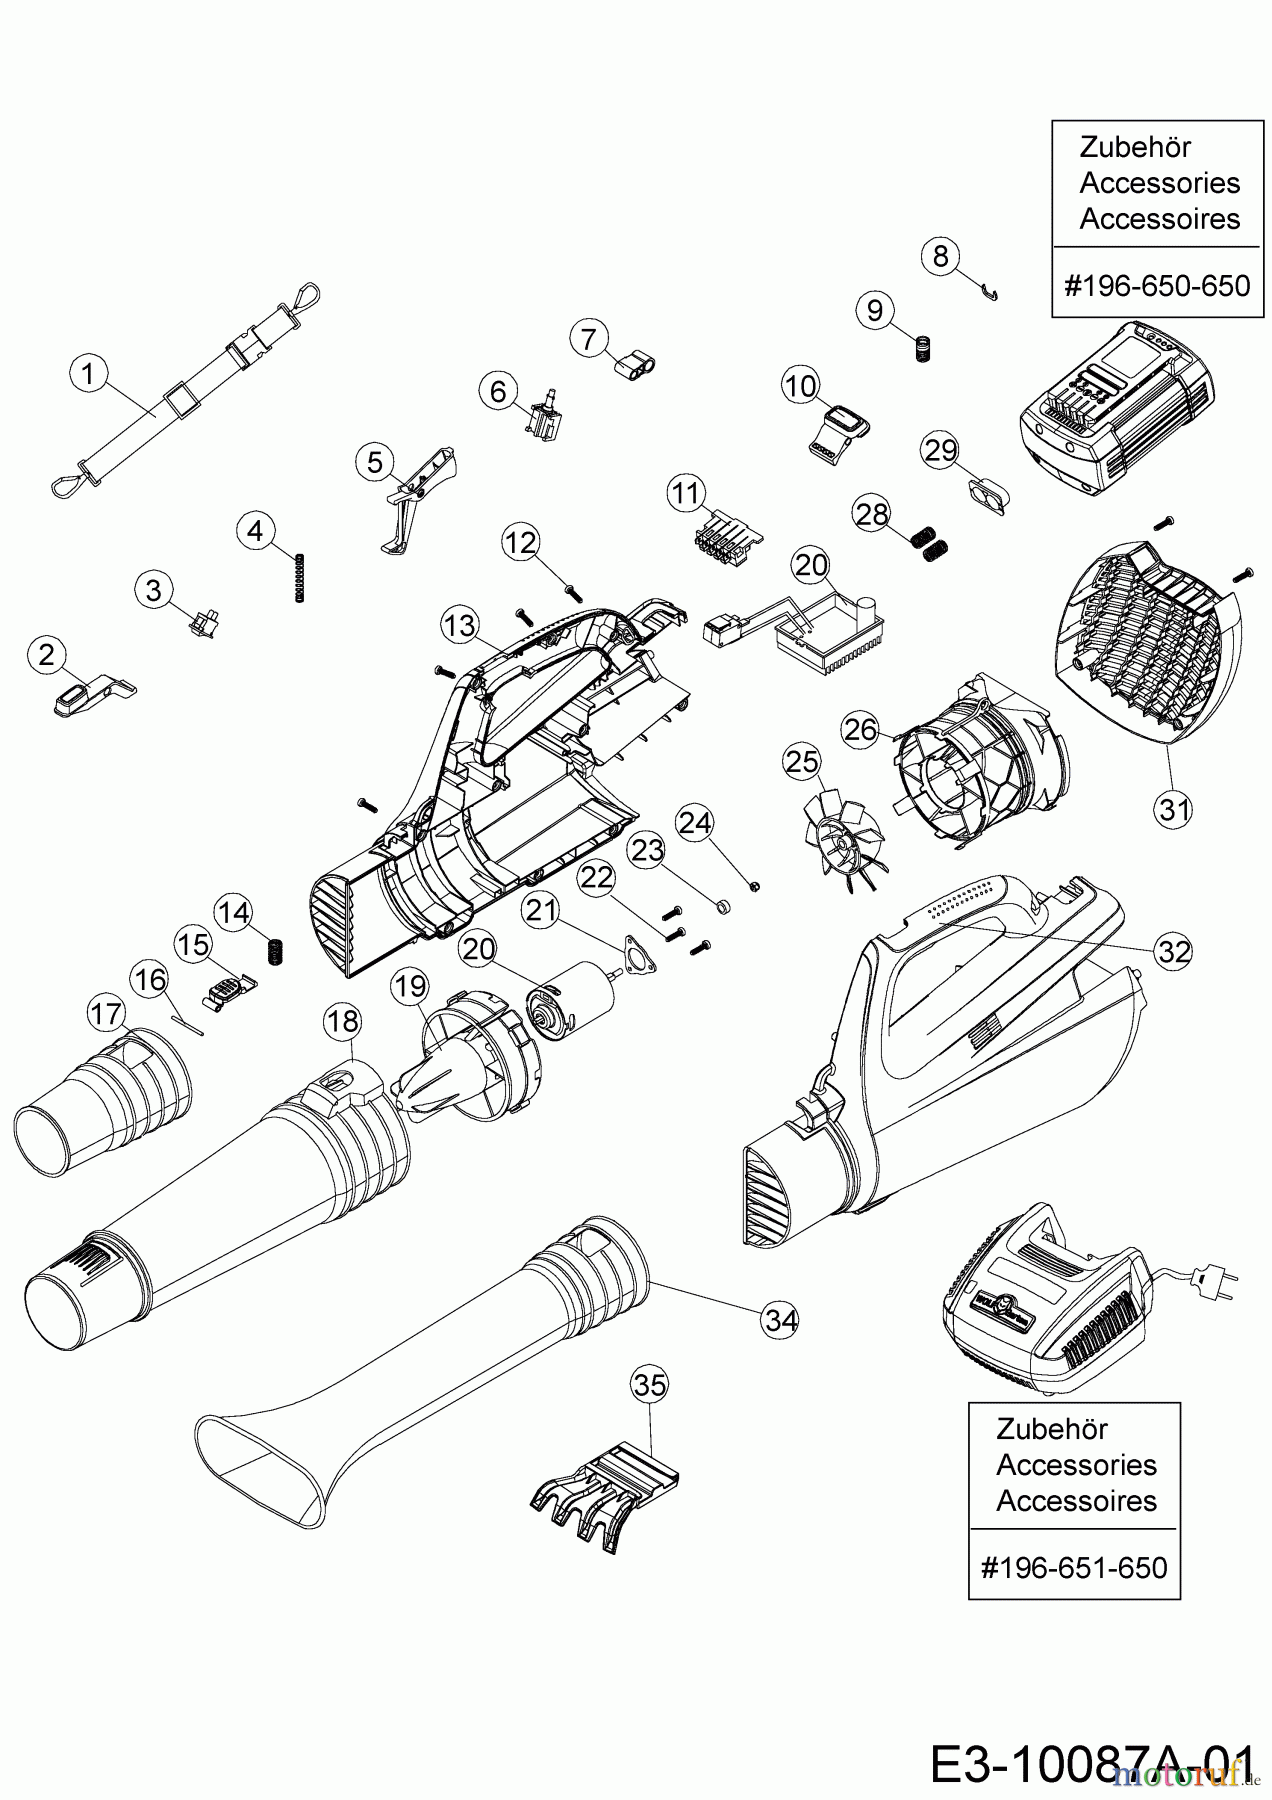  Wolf-Garten battery leaf blower 72V Li-Ion Power 24 B 41AA0BO-650  (2017) Basic machine